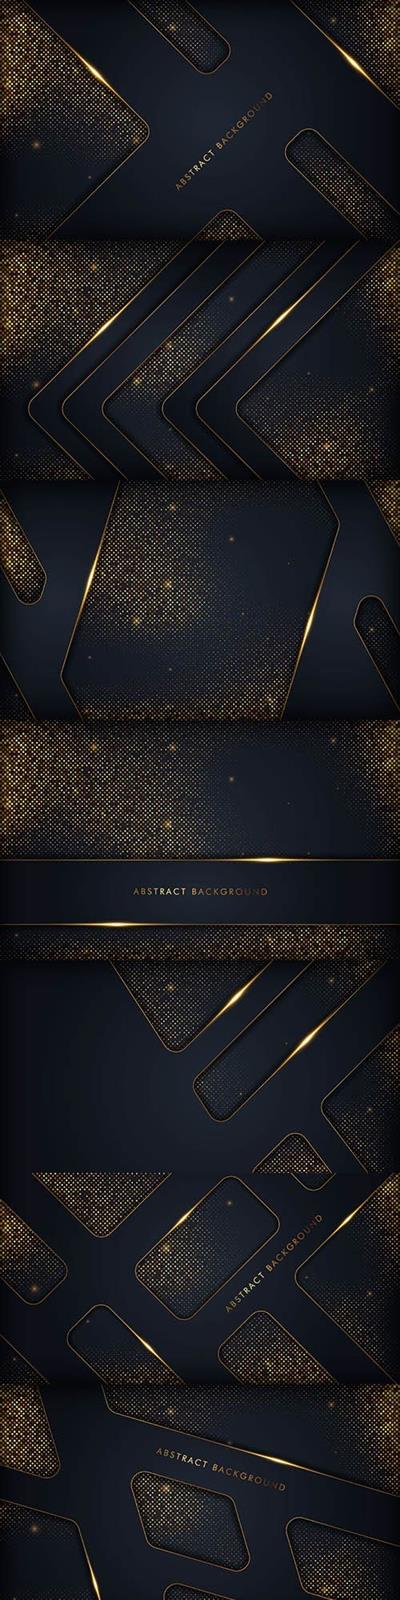 Luxury black background with golden glitter